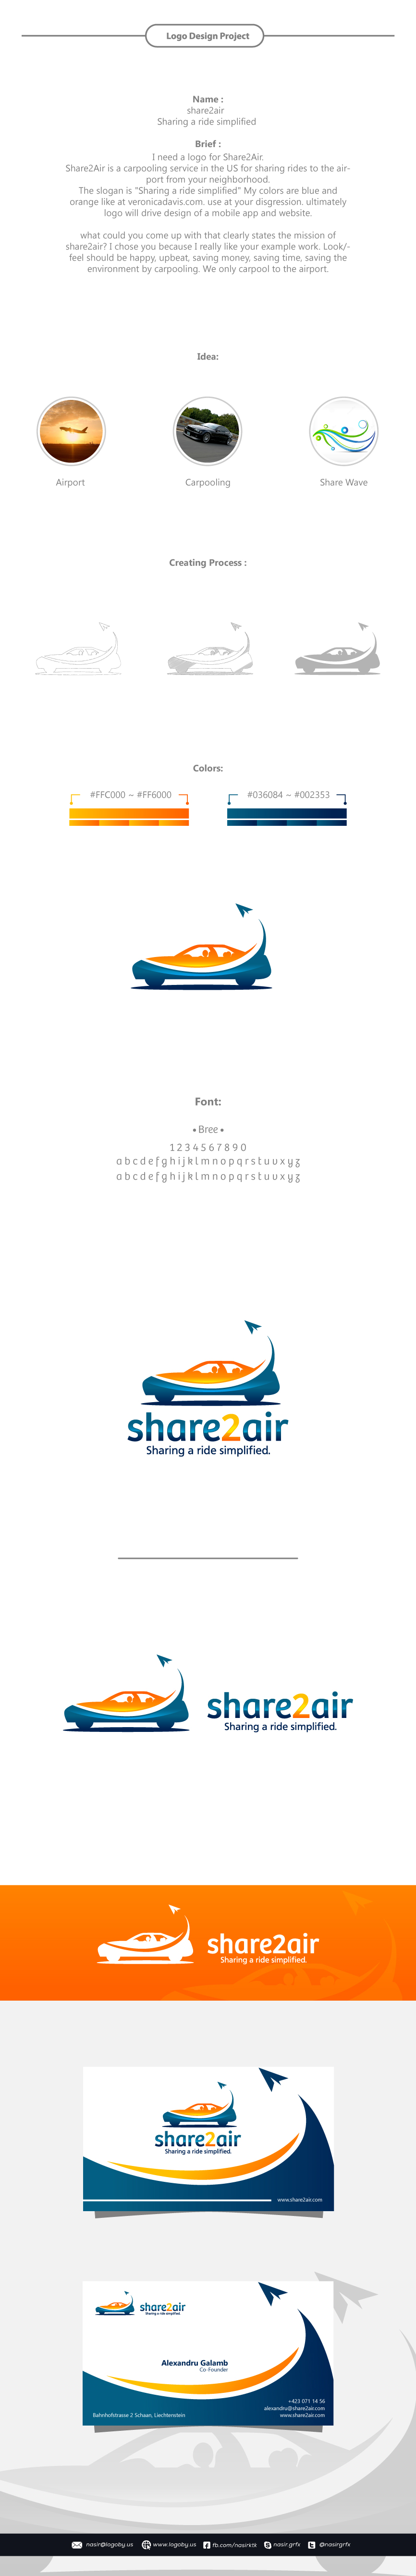 share2air Logo